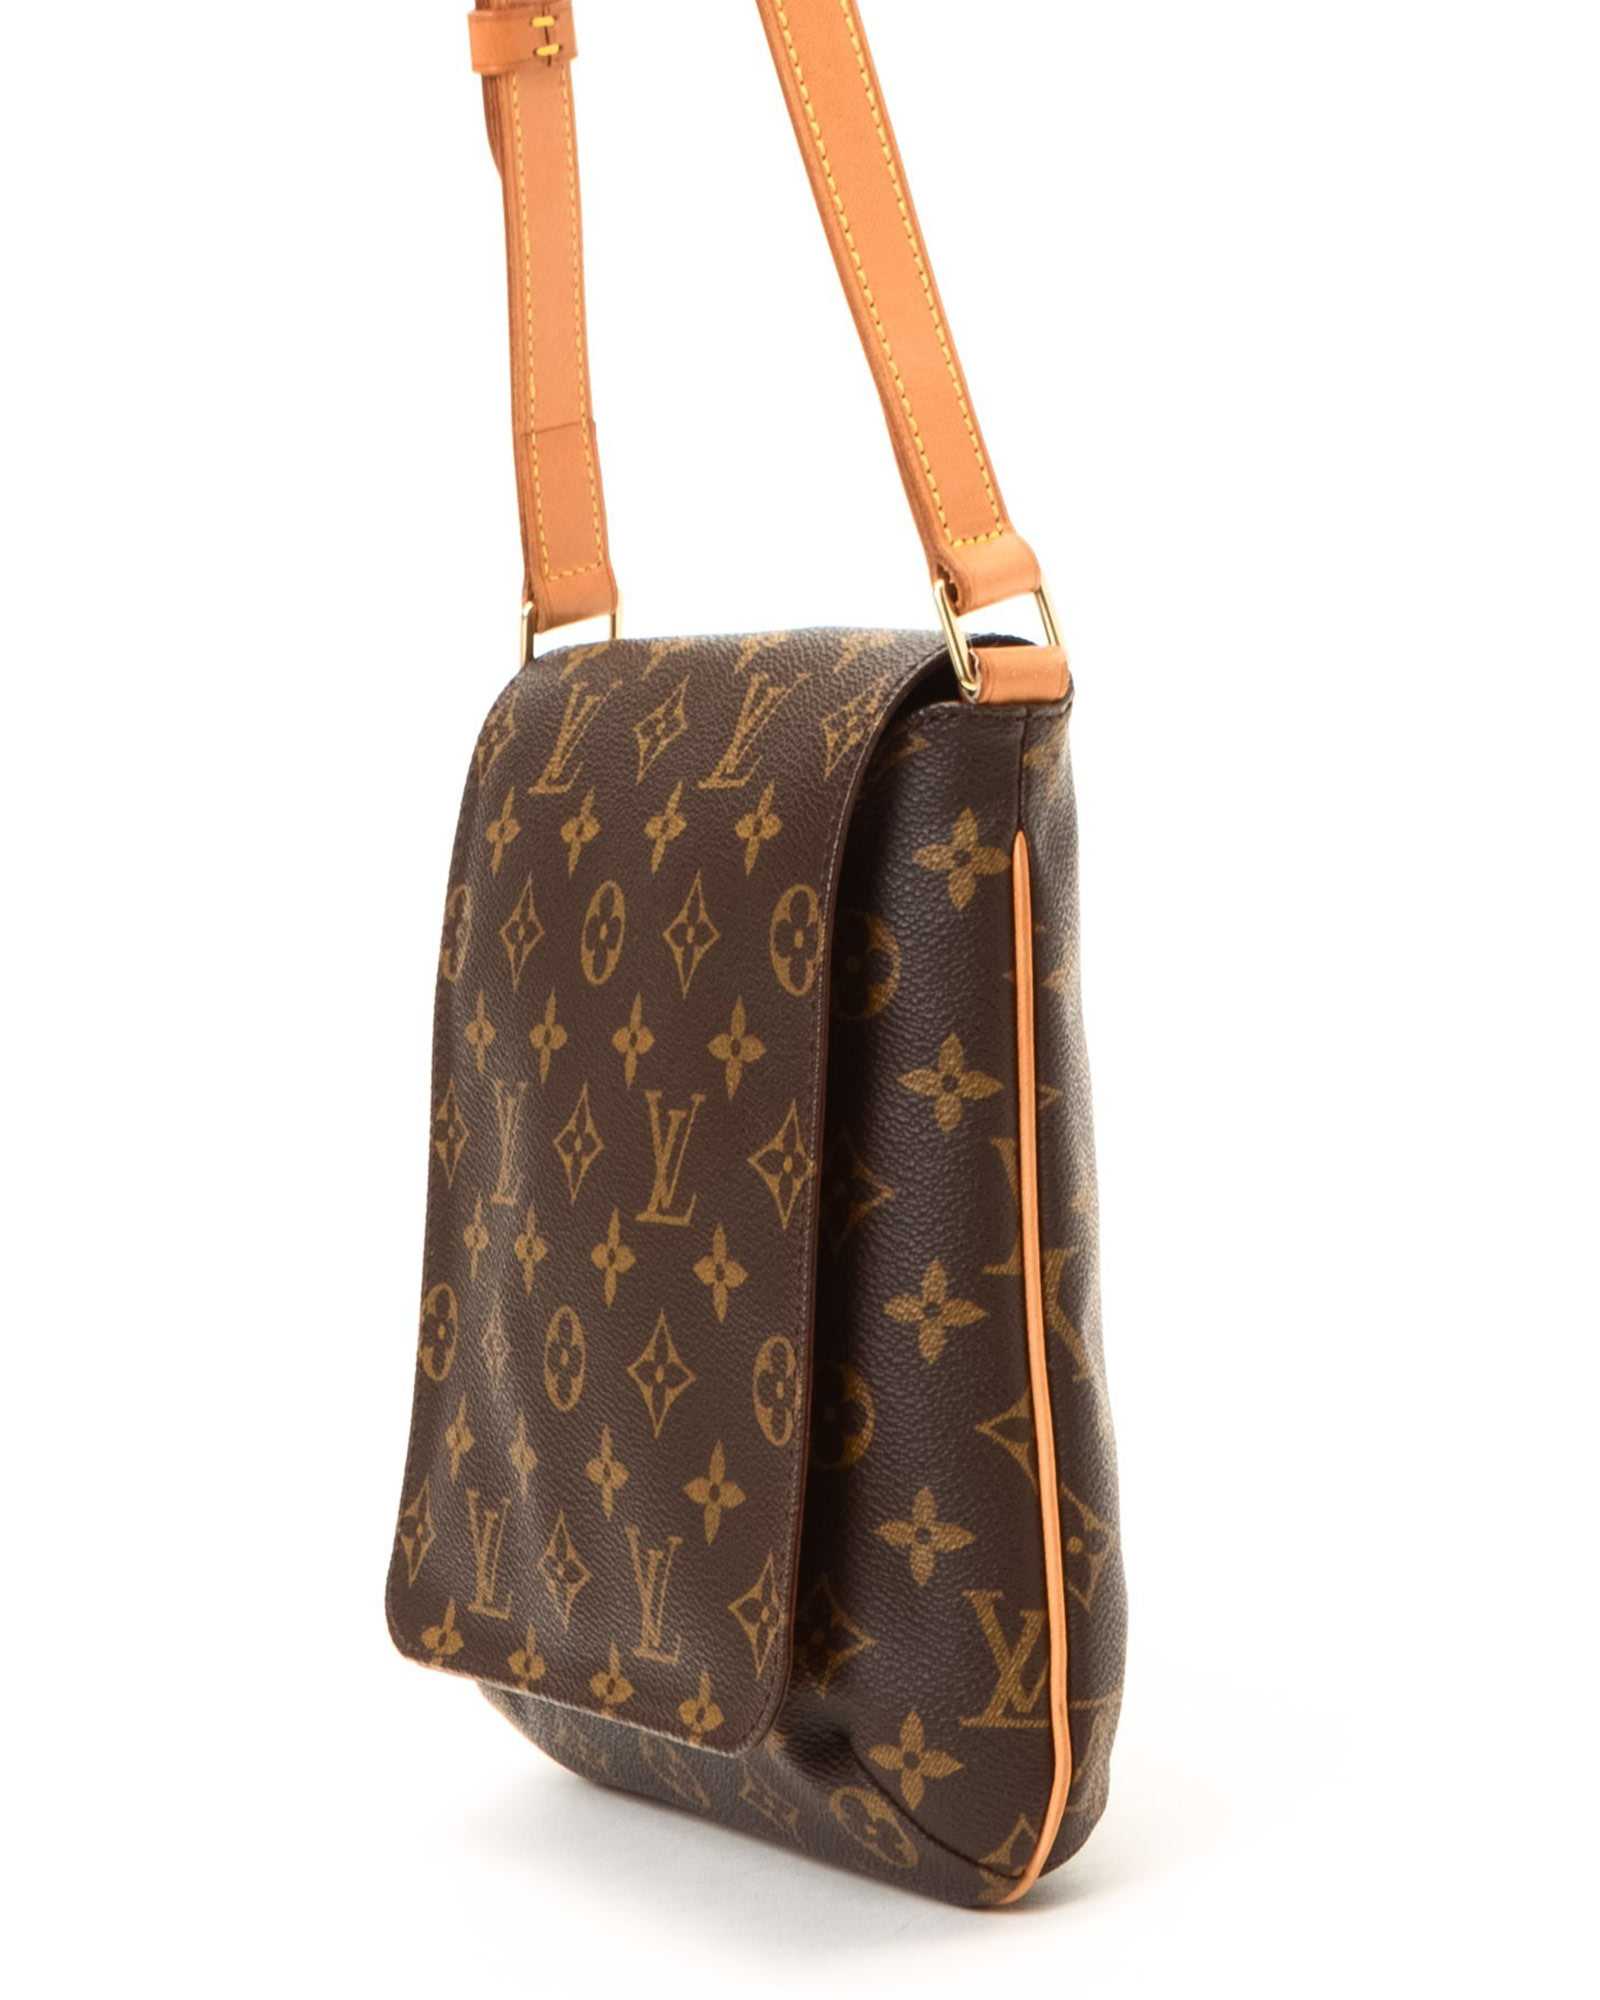 Lyst - Louis vuitton Shoulder Bag - Vintage in Brown